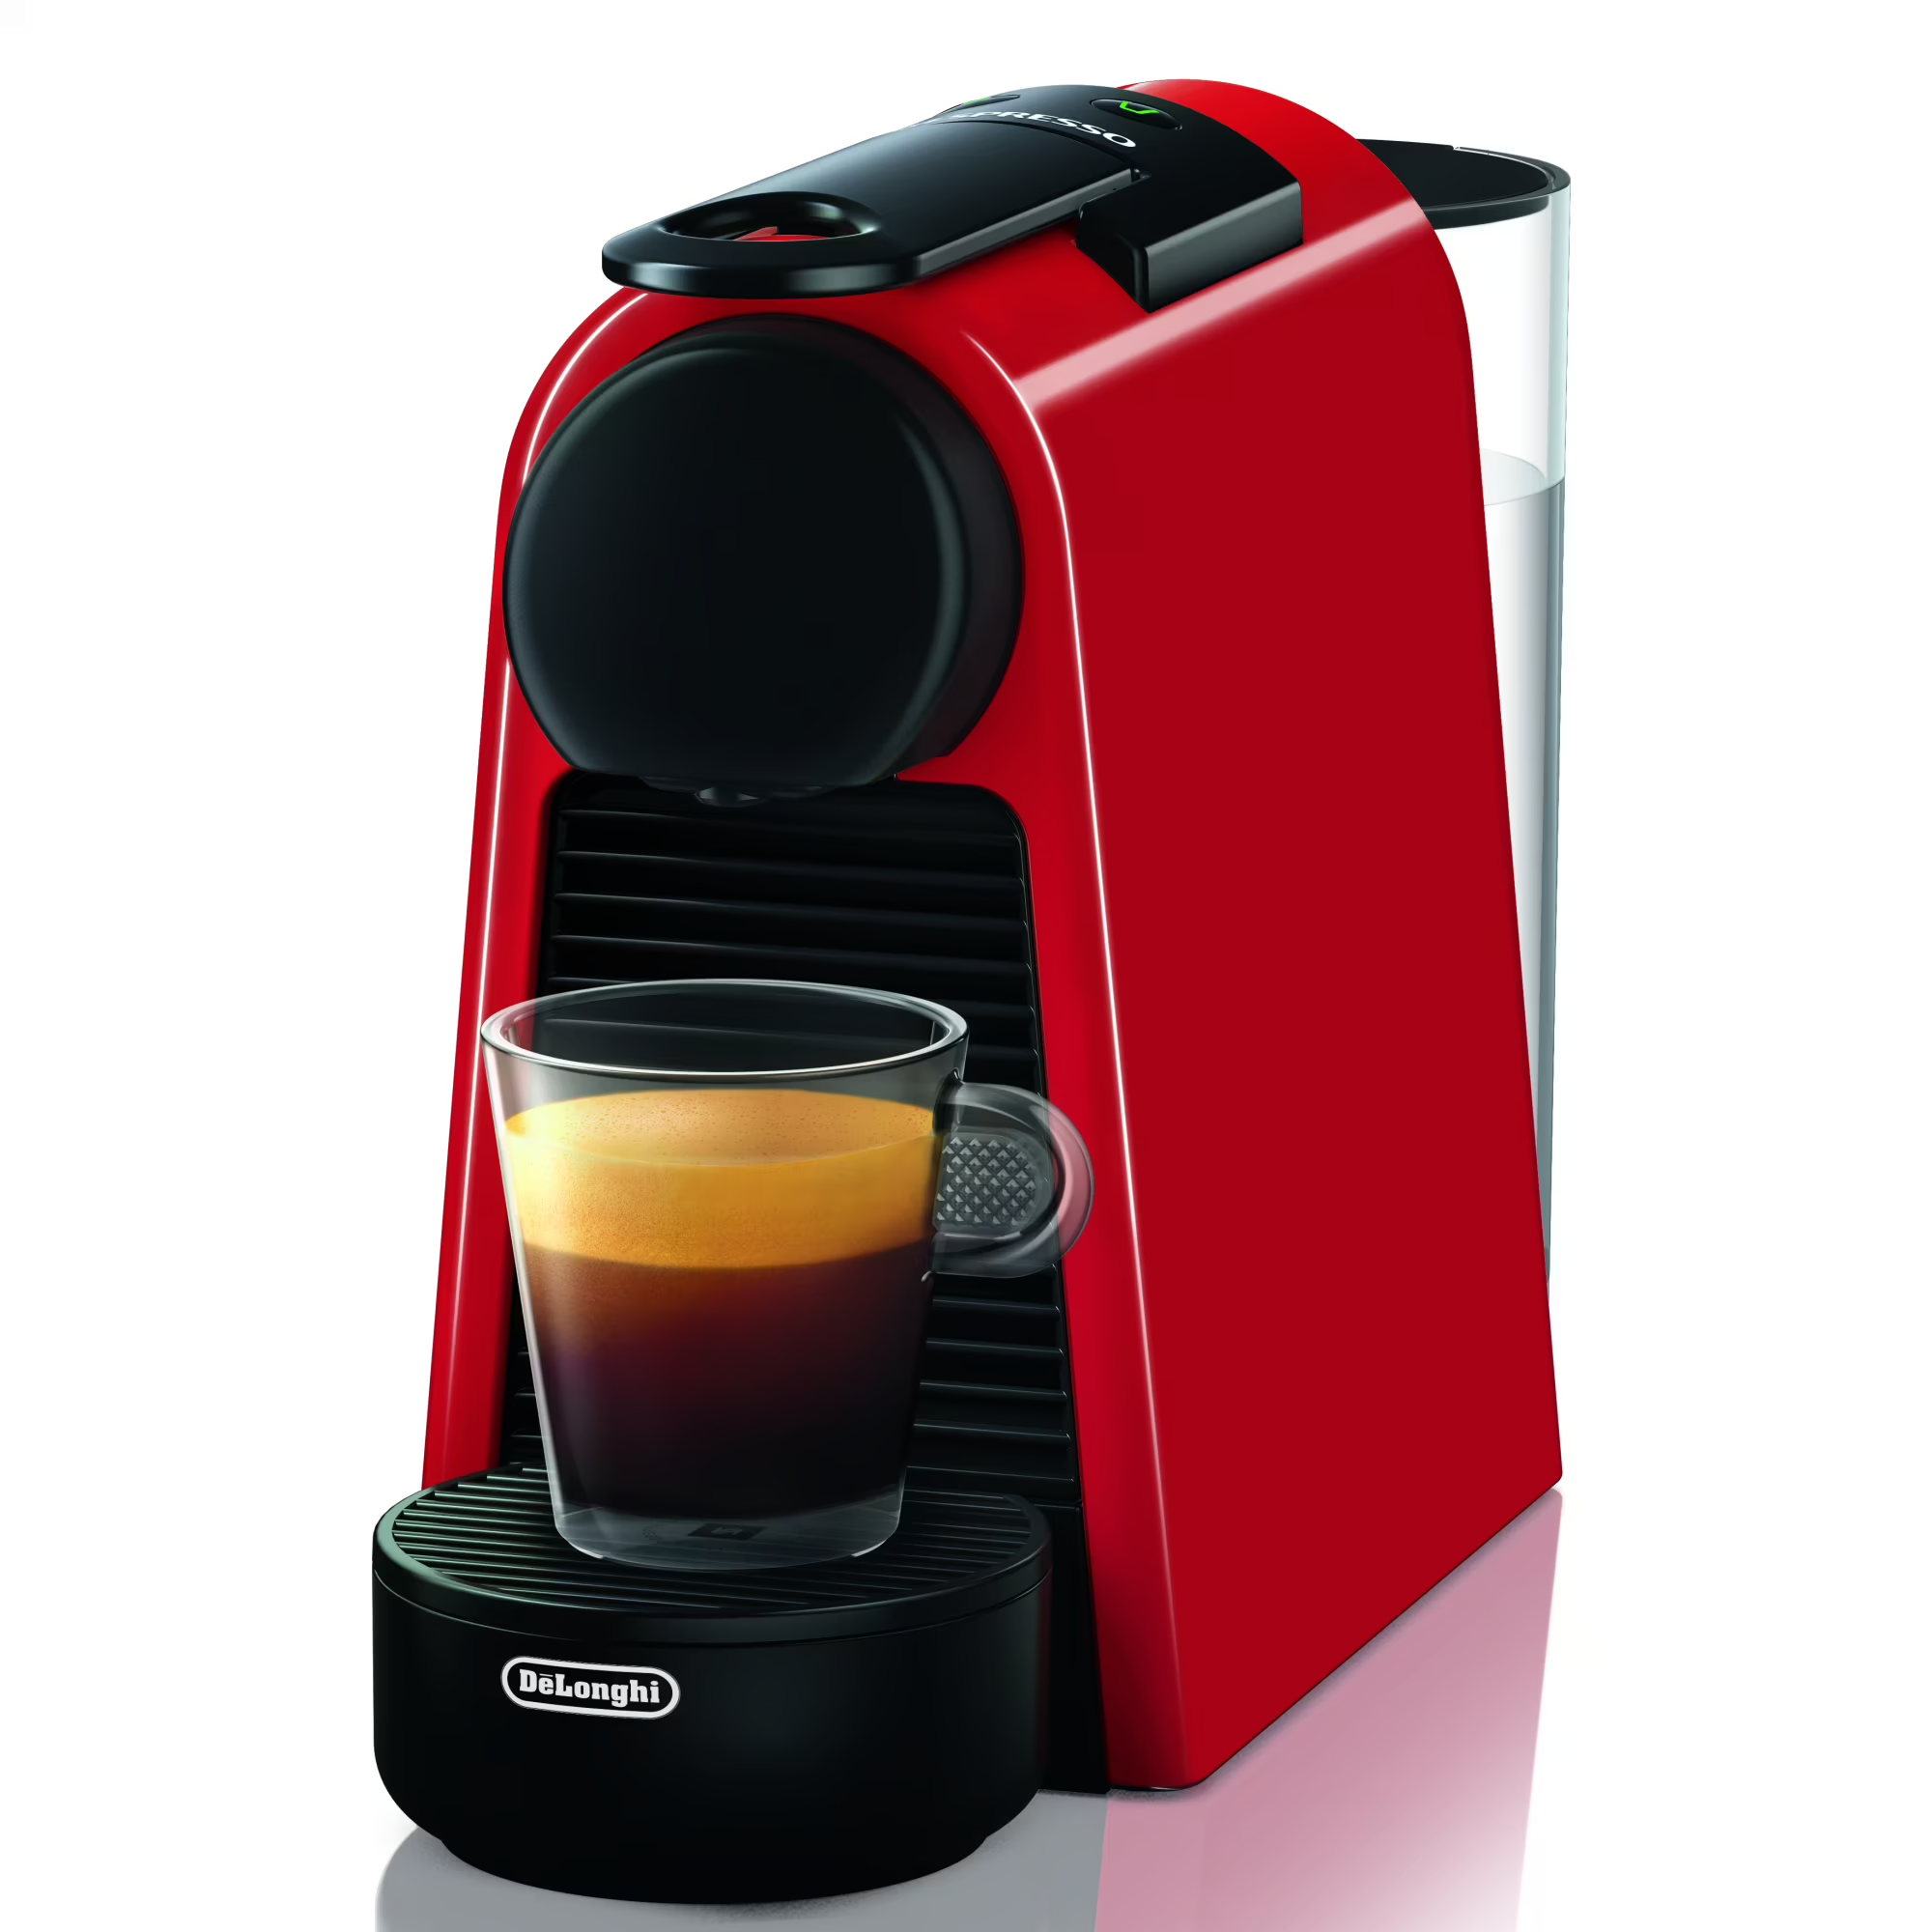 Aparat za kafu Delonghi EN85 Mini Nespresso RedAparat za kafu Delonghi EN85 Mini Nespresso Red